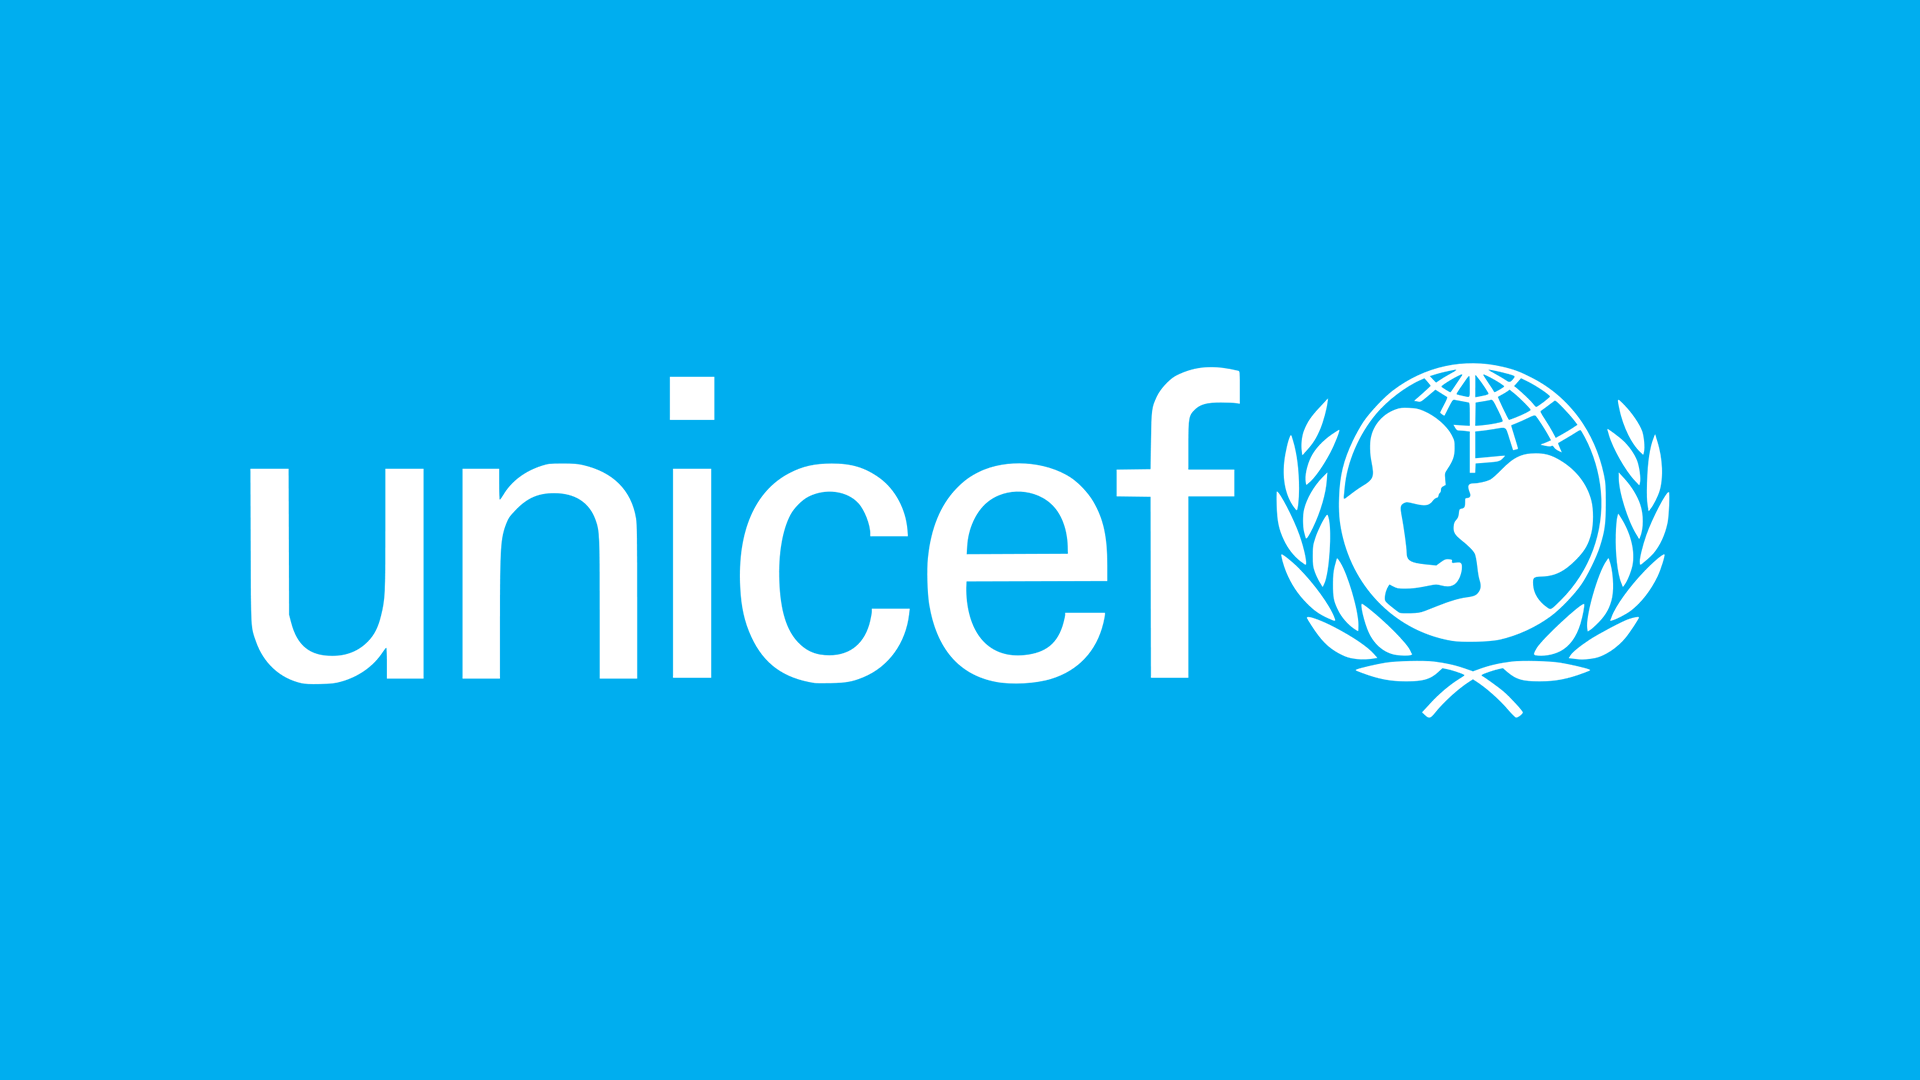 UNICEF mHealth Strategy – John Ryan, Interaction Designer